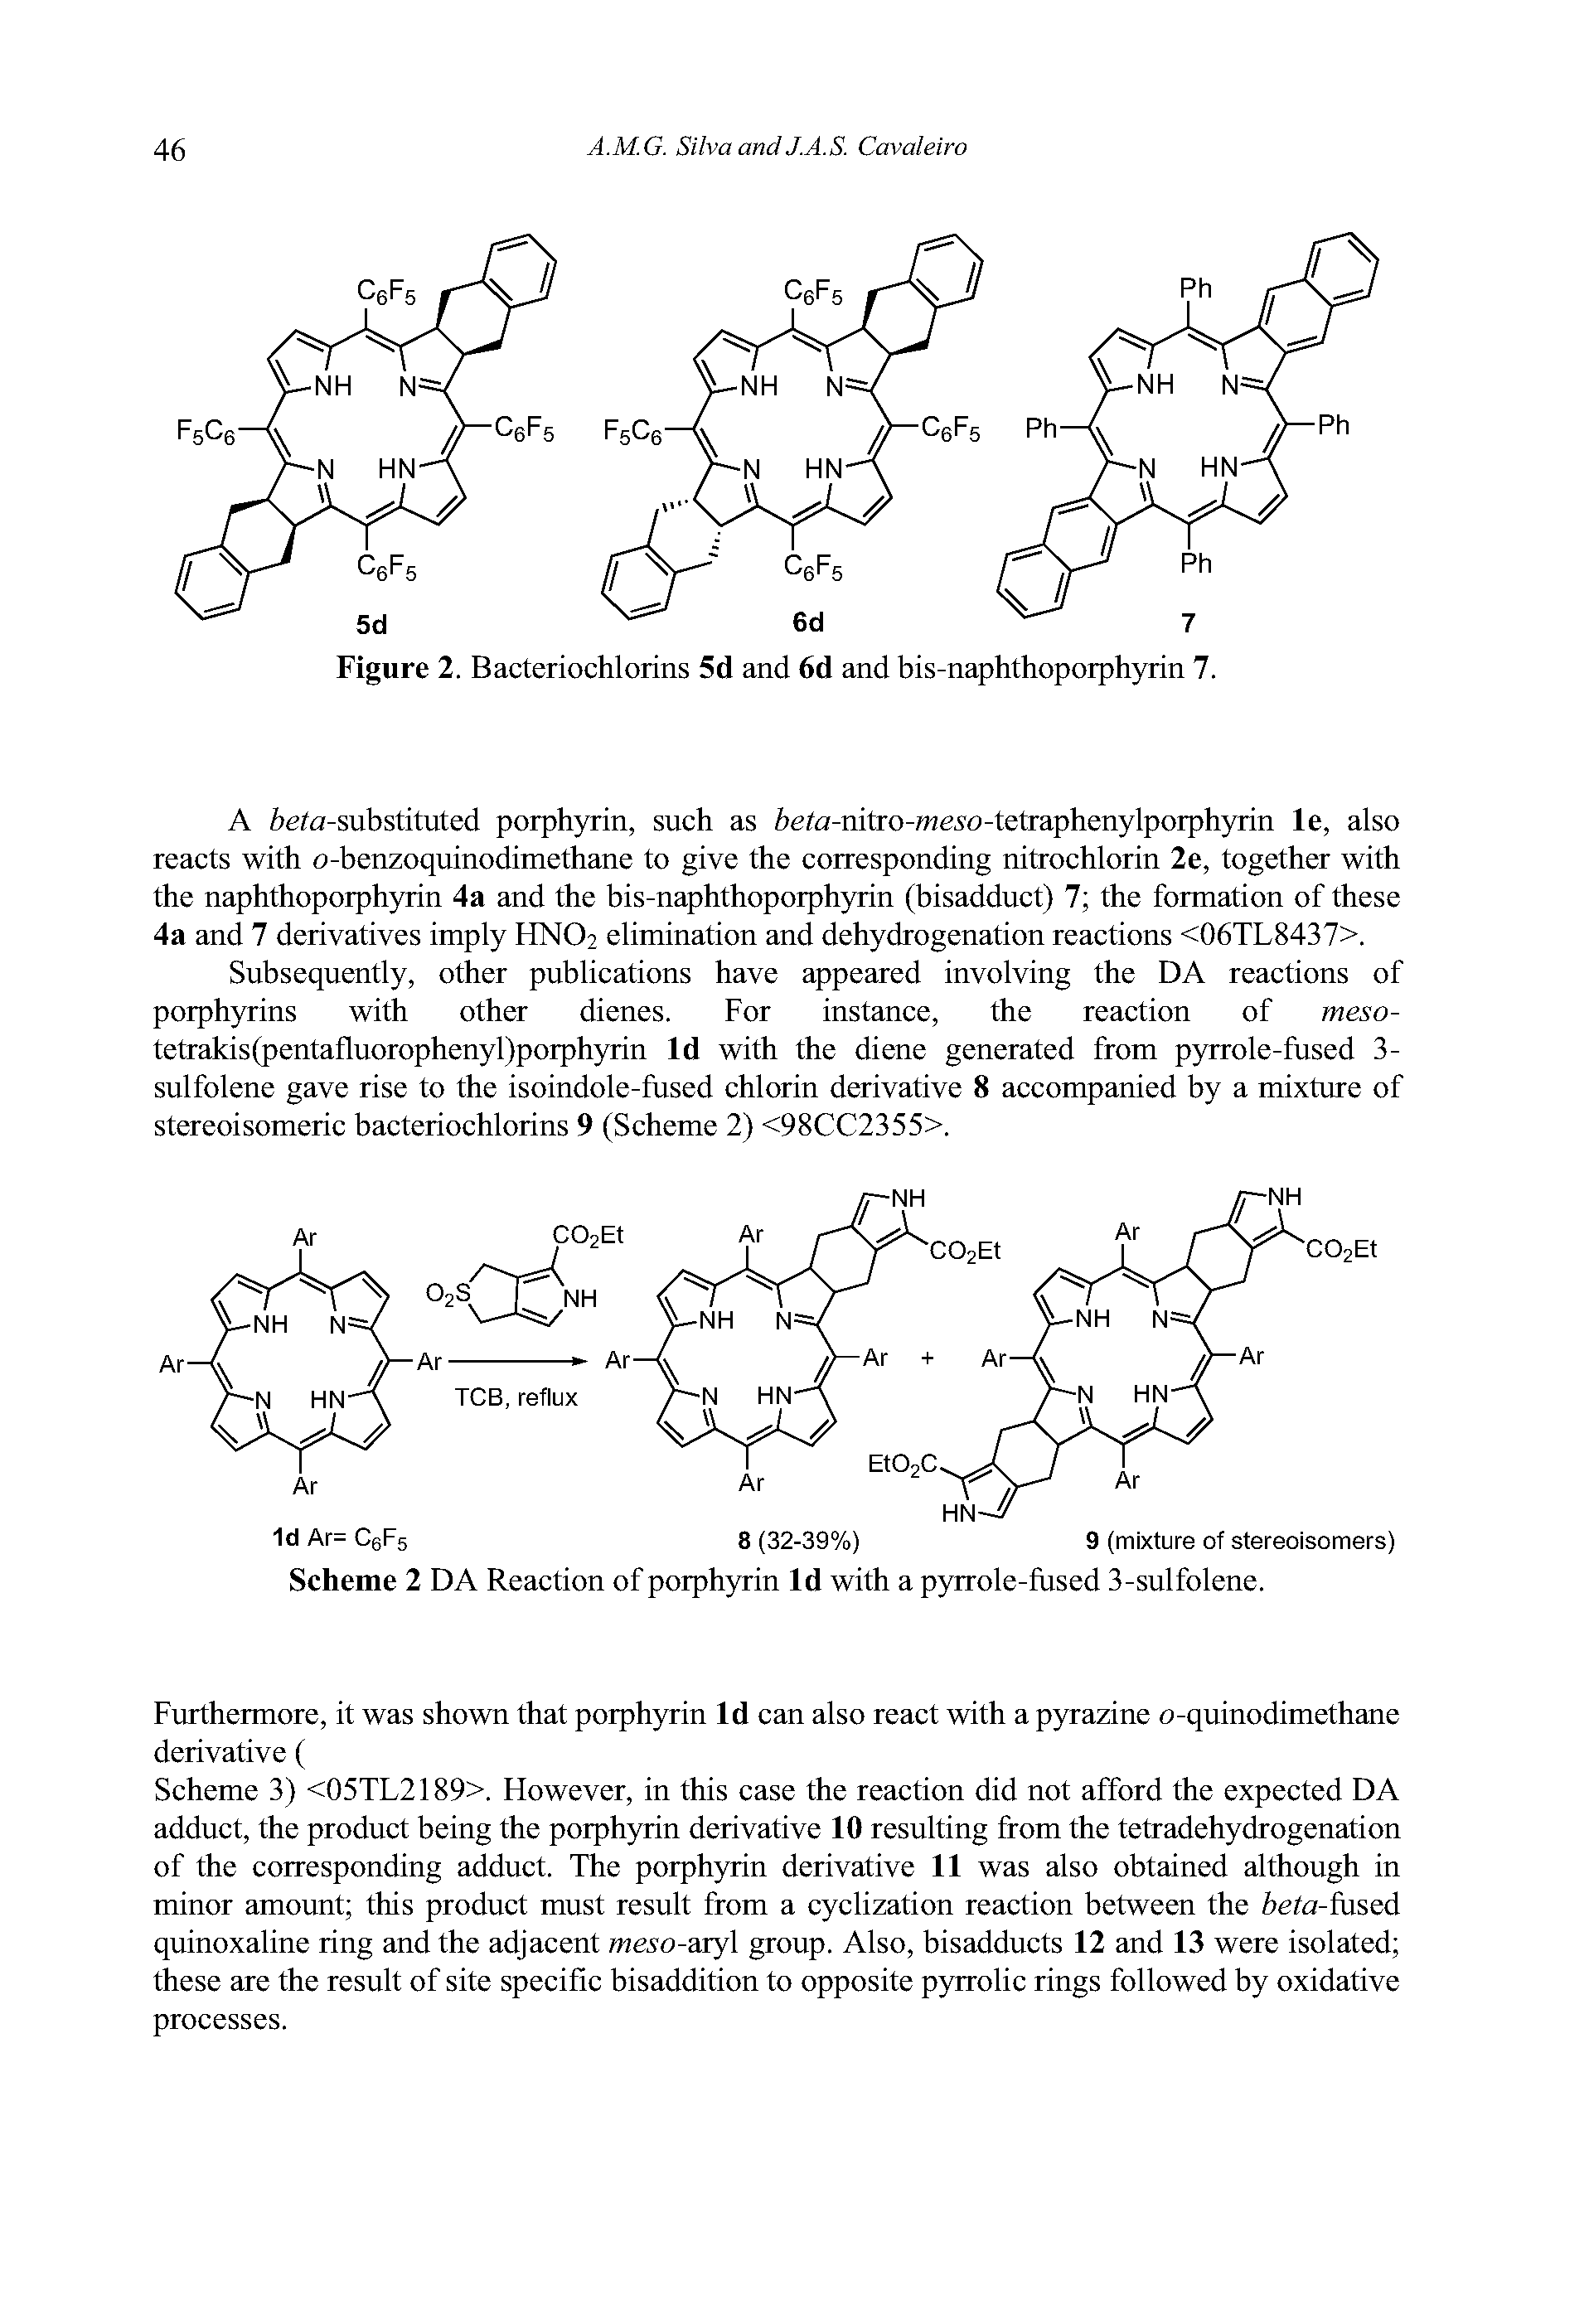 Scheme 2 DA Reaction of porphyrin Id with a pyrrole-fused 3-sulfolene.